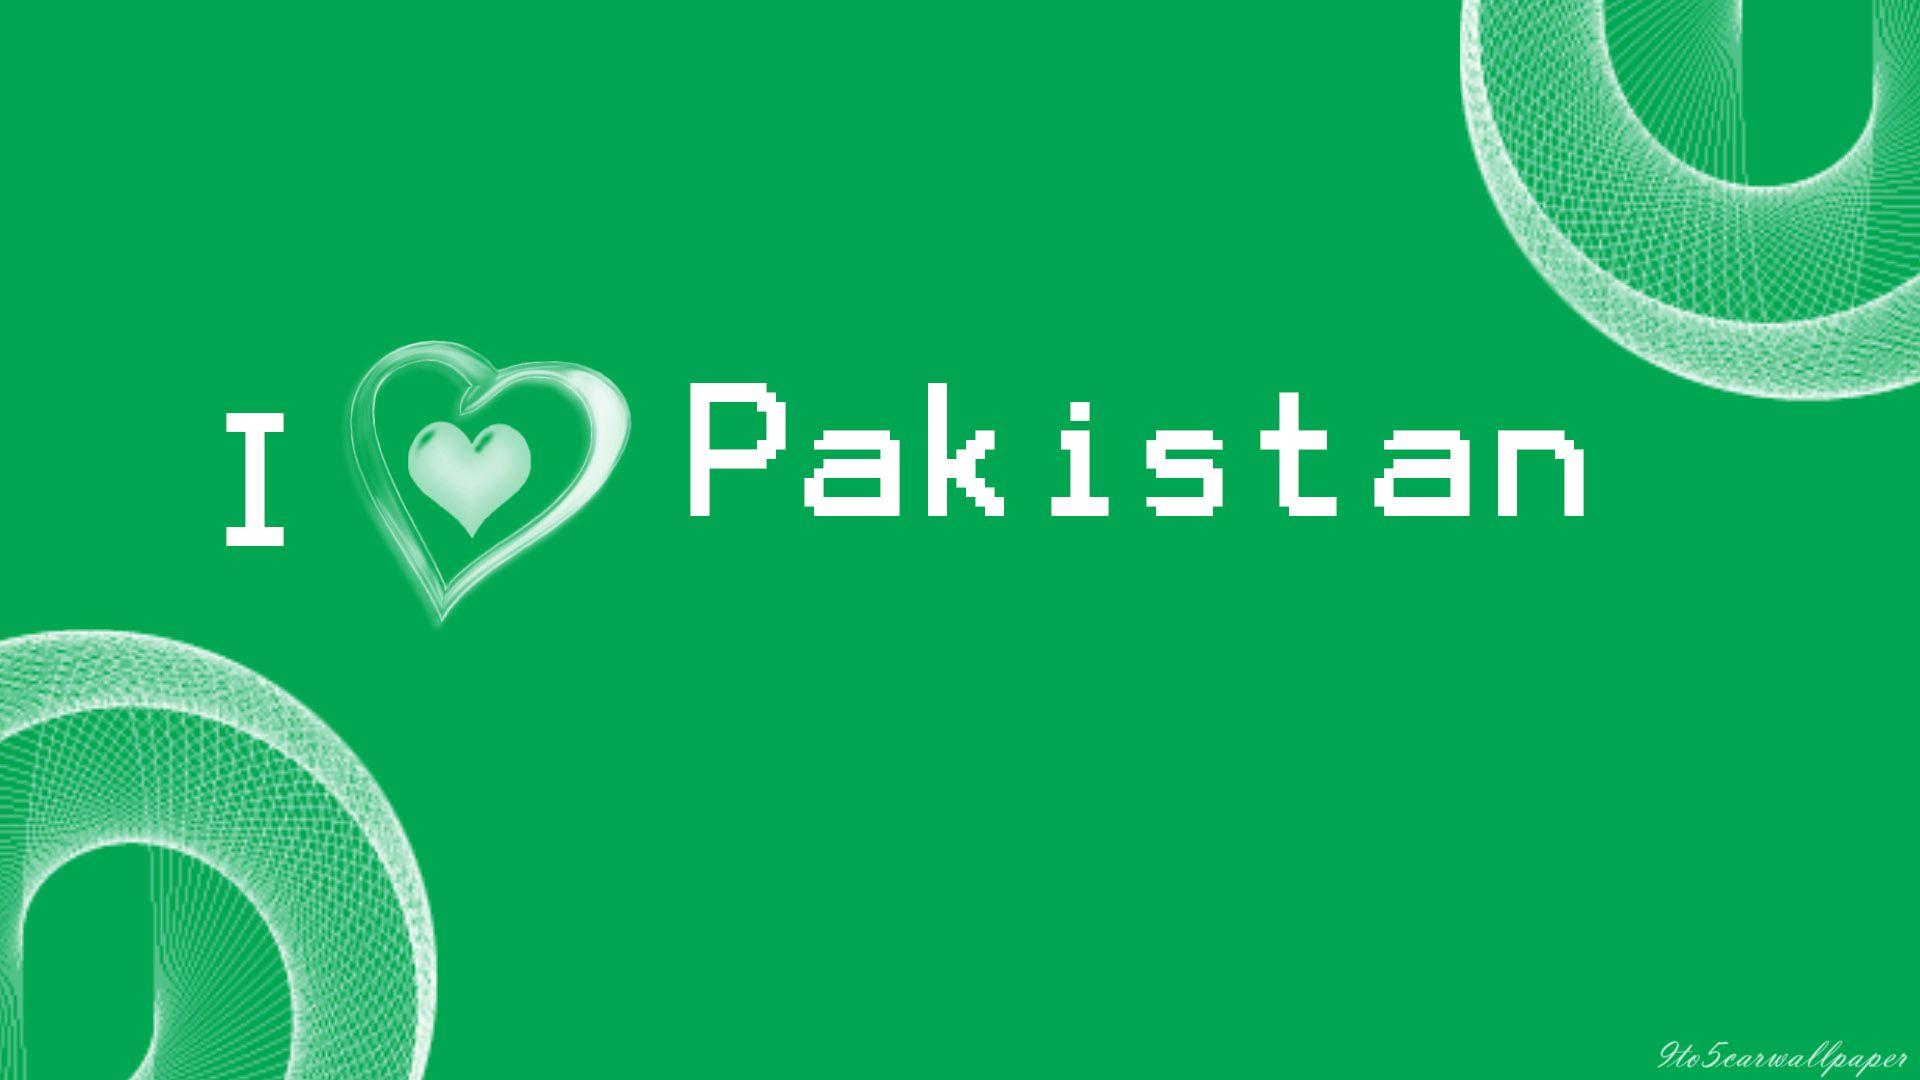 Pakistan Independence Day wallpapers  Freelance Developer Blog